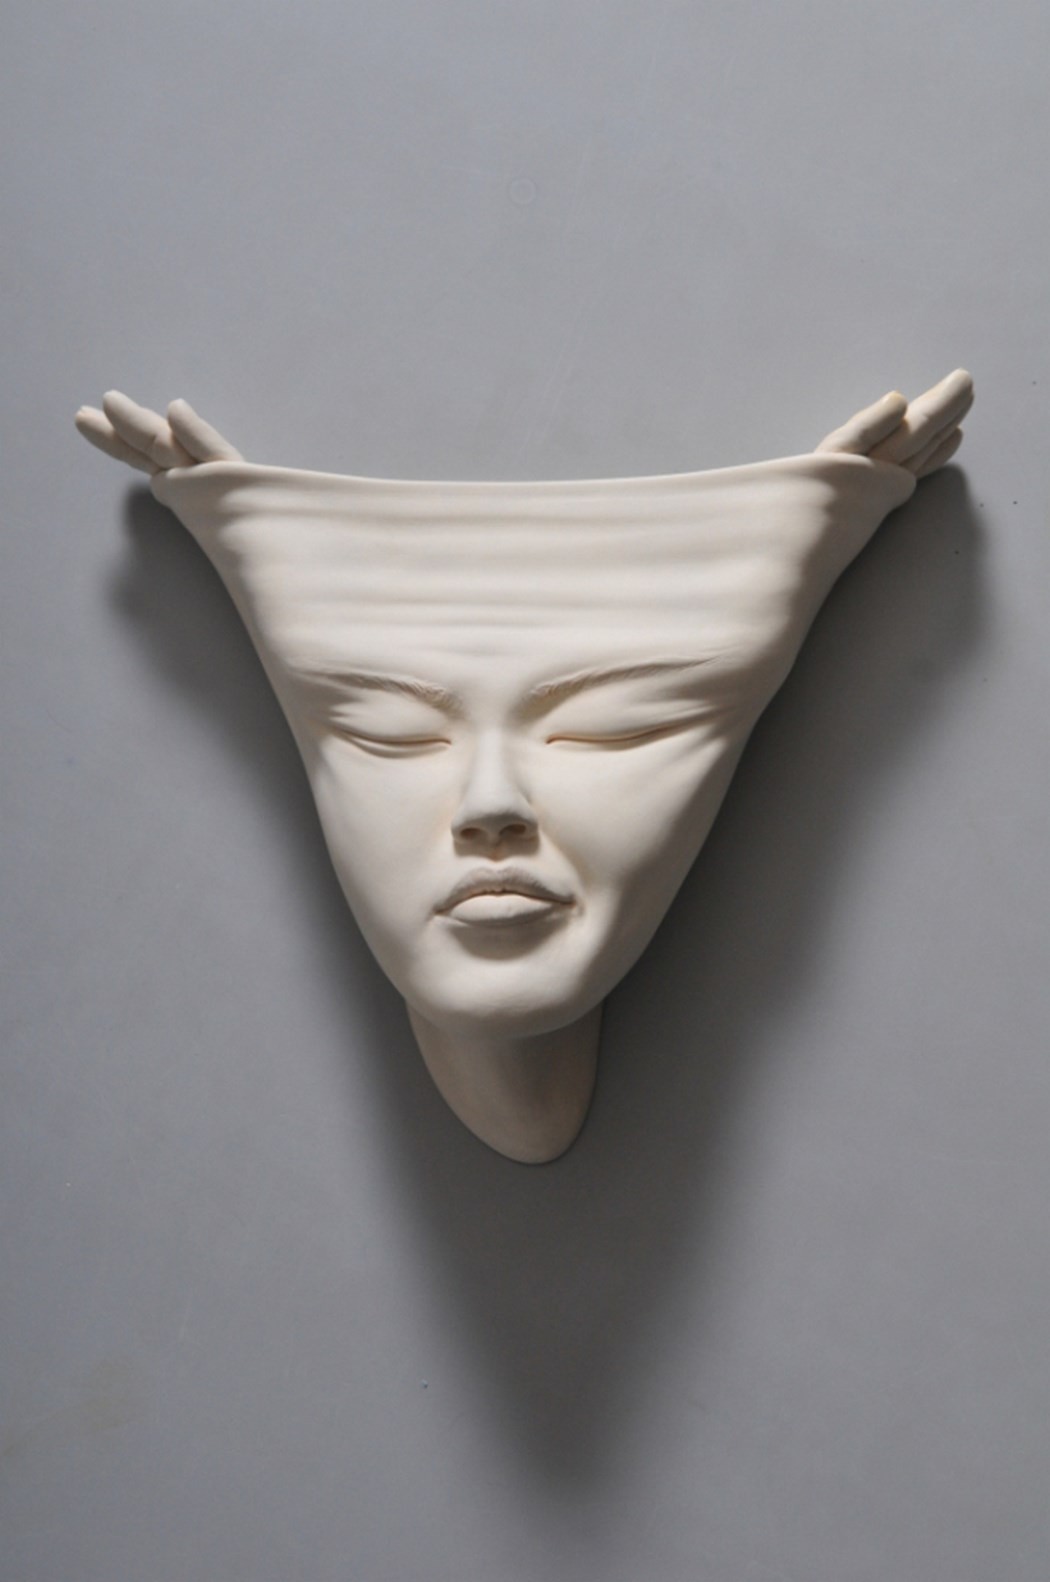 16 ceramic sculpture byjohnson tsang